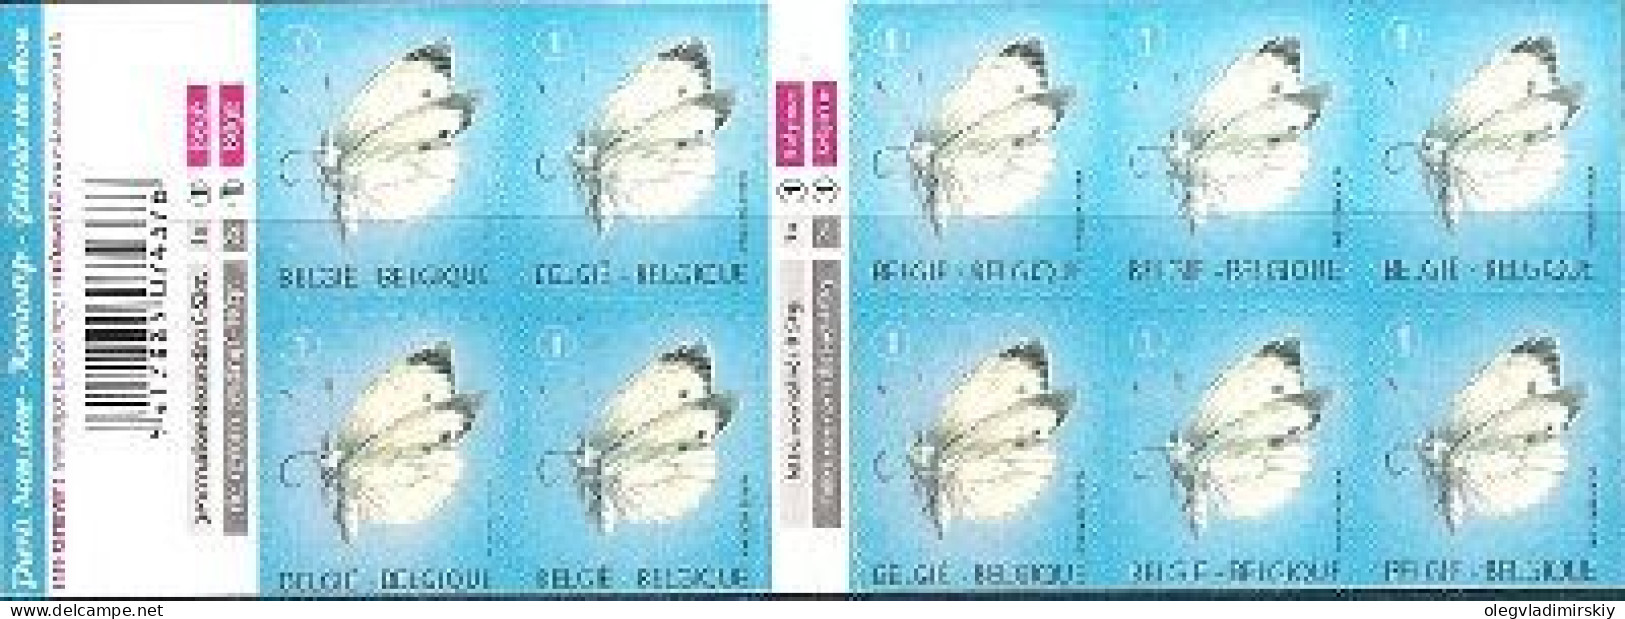 Belgium Belgique Belgien 2012 Butterflies Definitives Booklet Of 10 Stamps MNH - Papillons